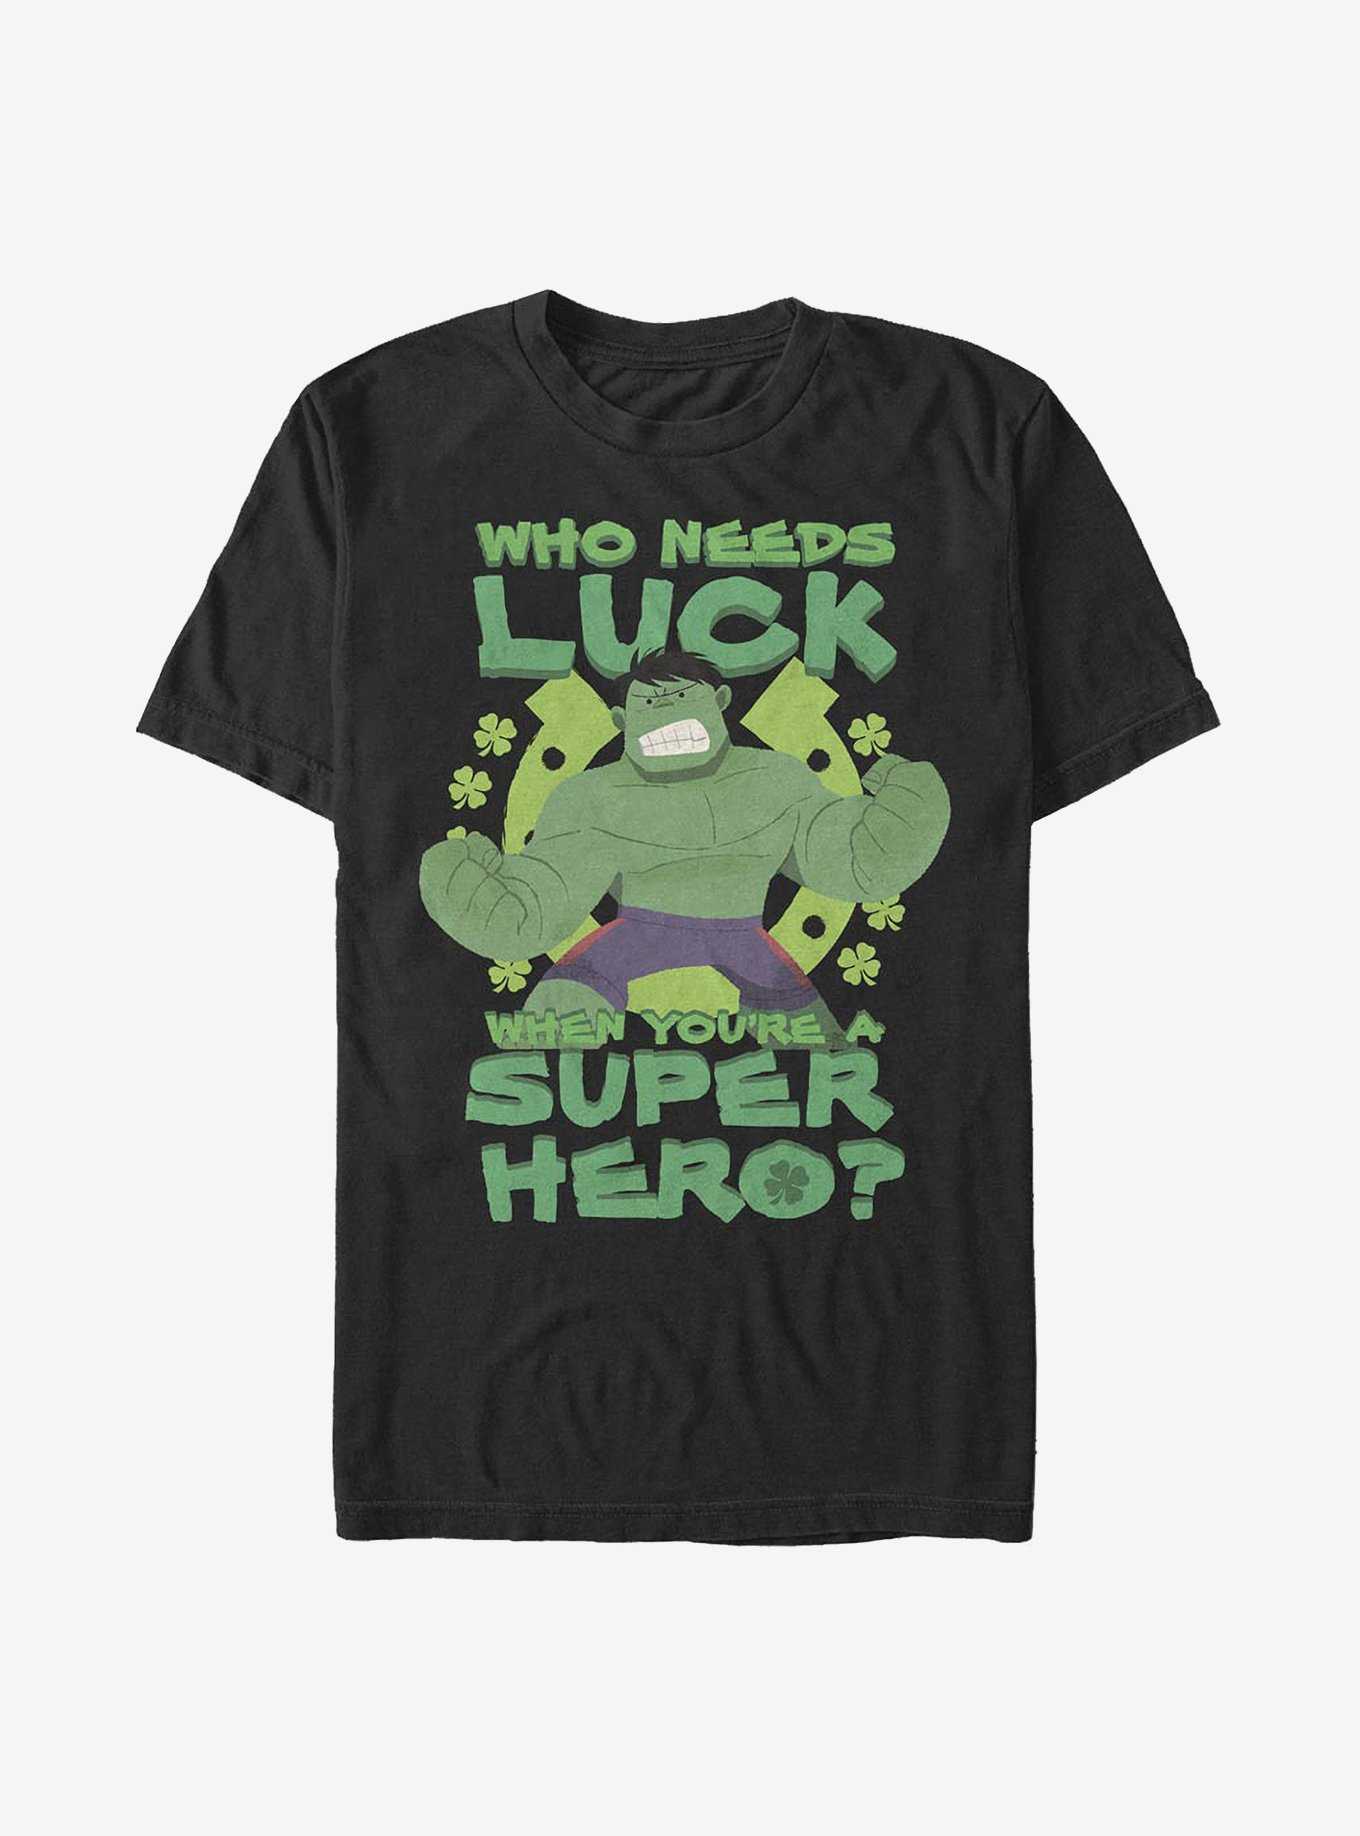 Marvel The Hulk Super Hulk Luck T-Shirt, , hi-res